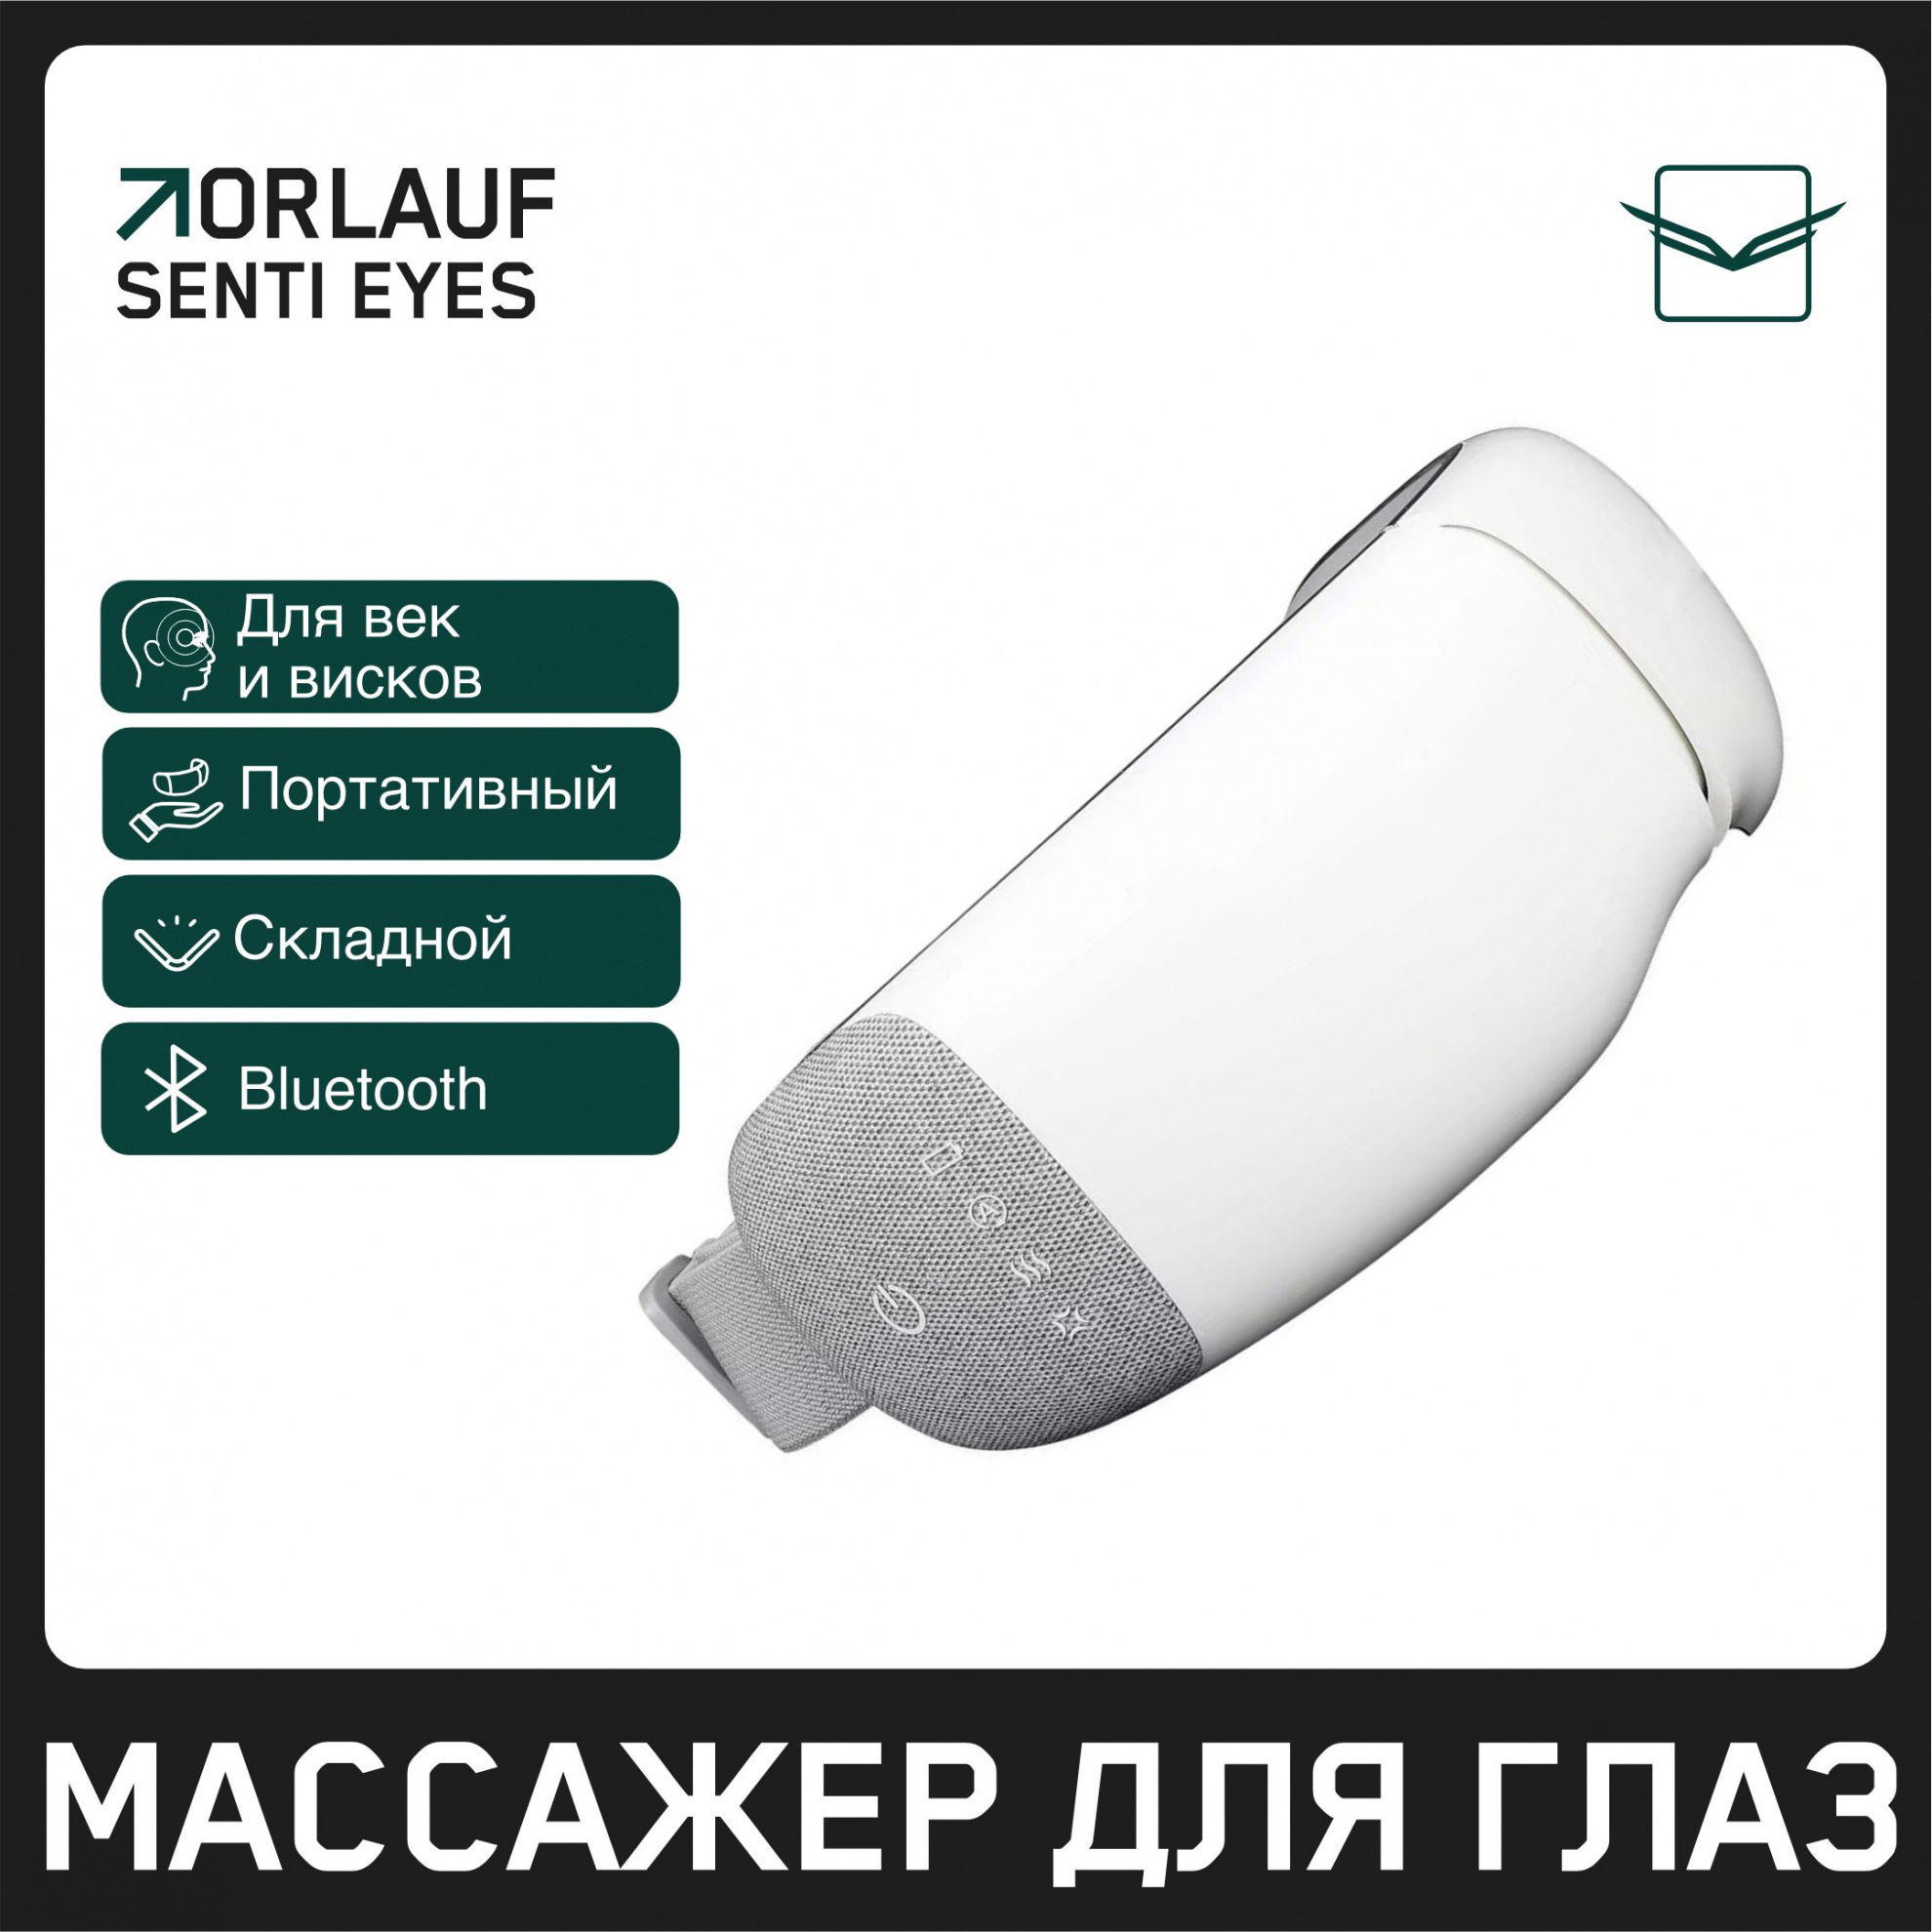 Orlauf Senti Eyes из каталога устройств для массажа в Челябинске по цене 9400 ₽